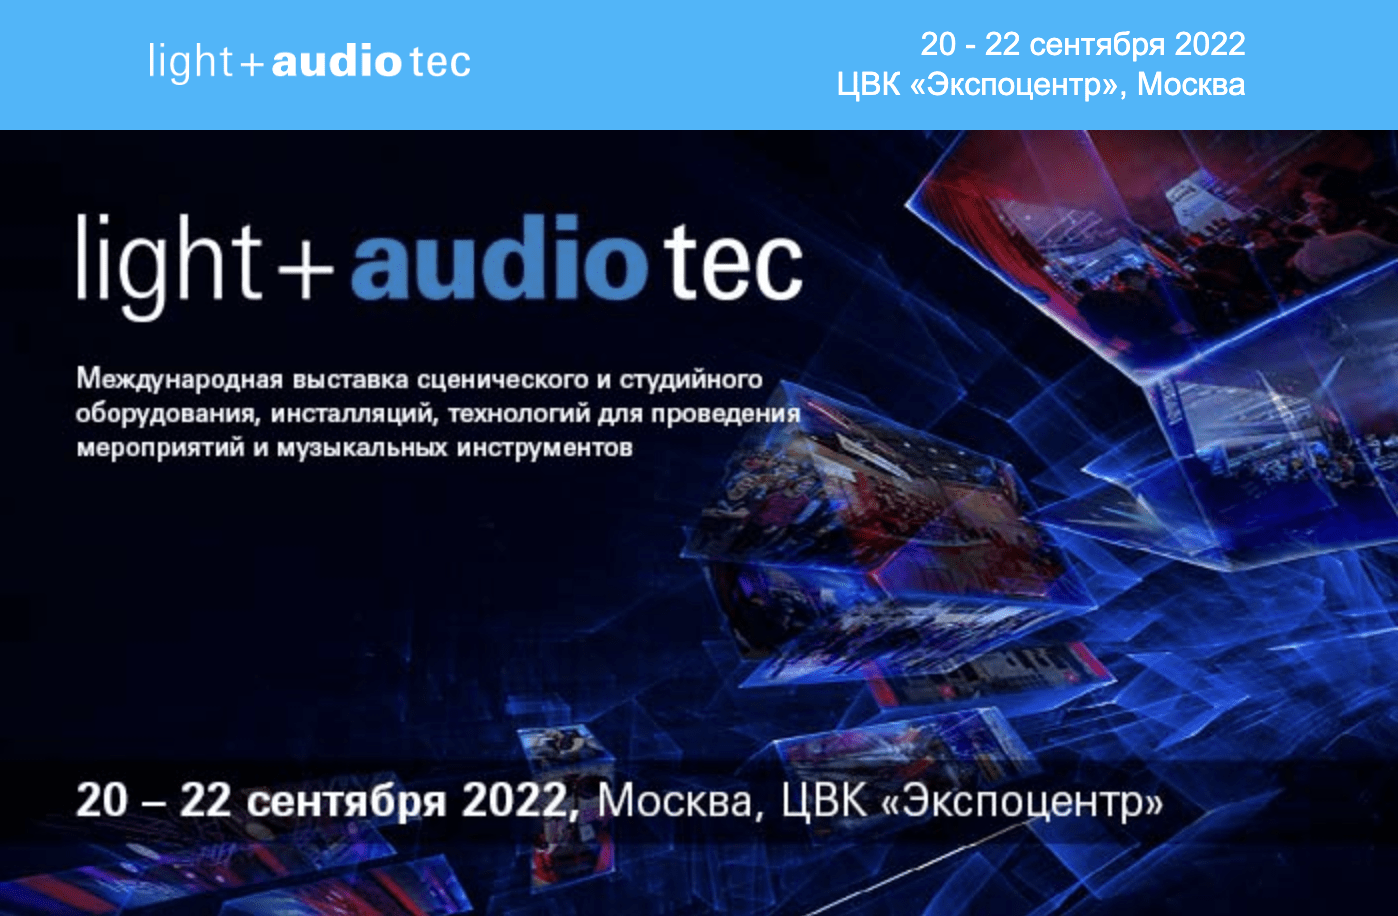 Light + Audio Tec